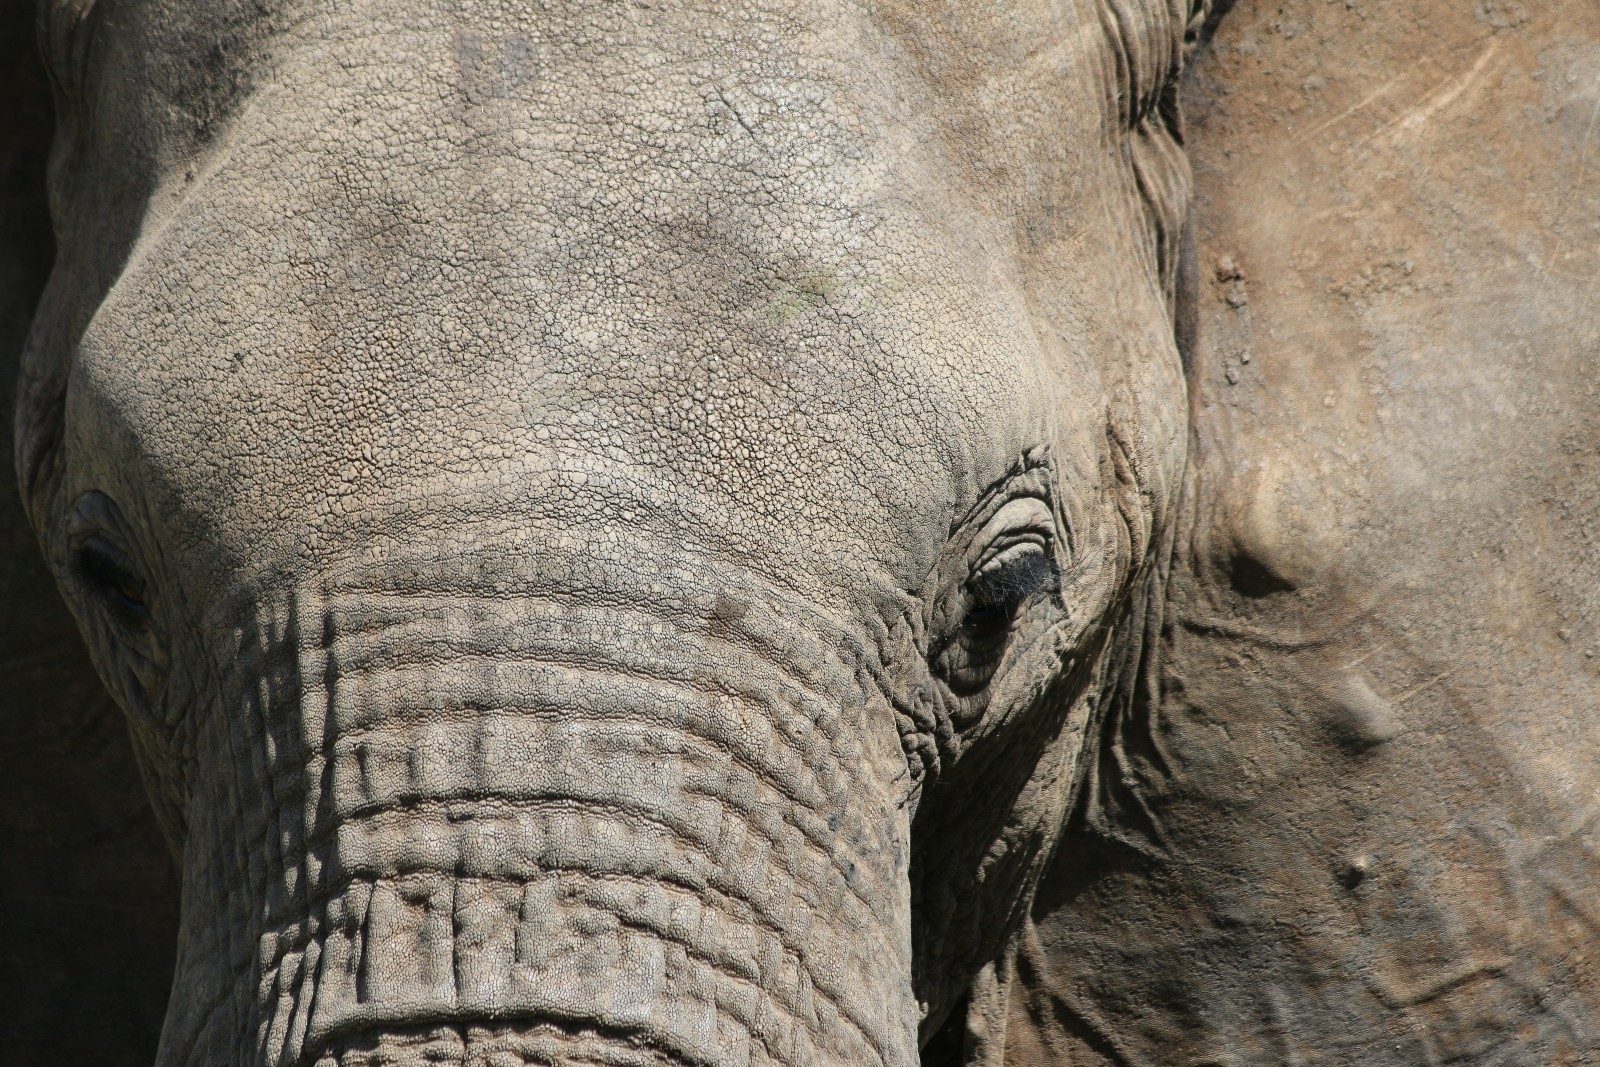 a close up of an elephants face